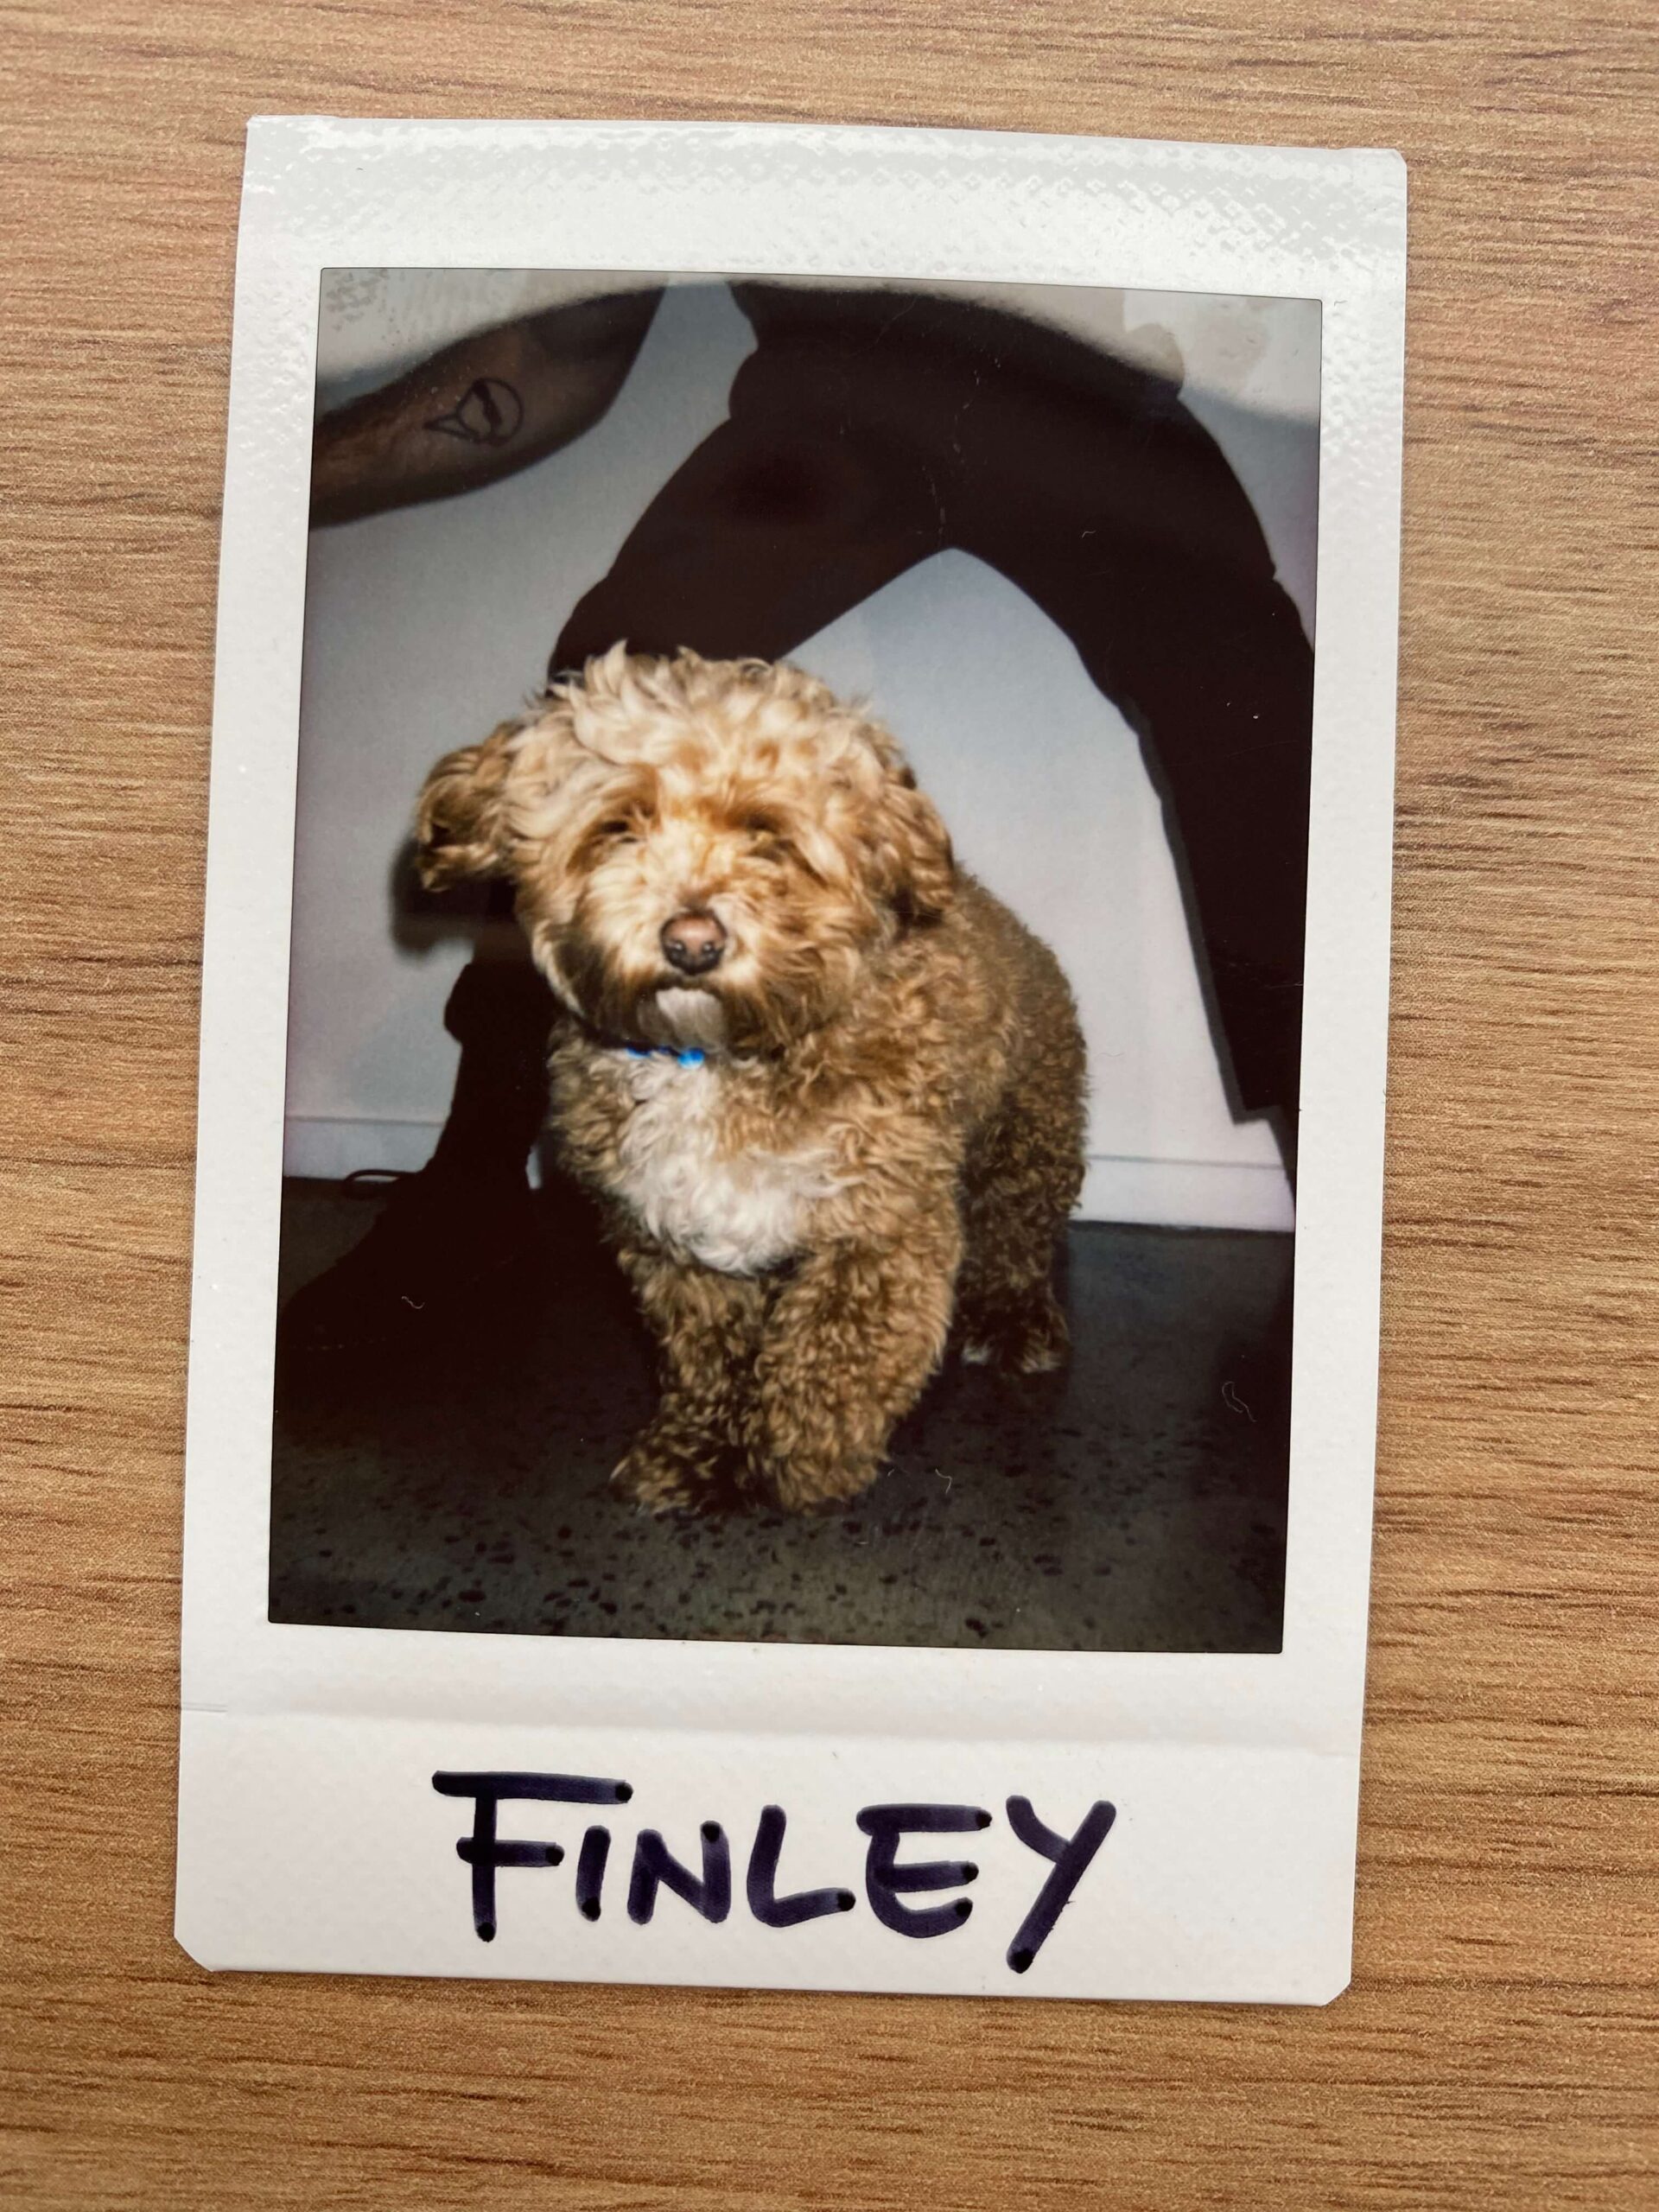 Finley - Staff polaroid